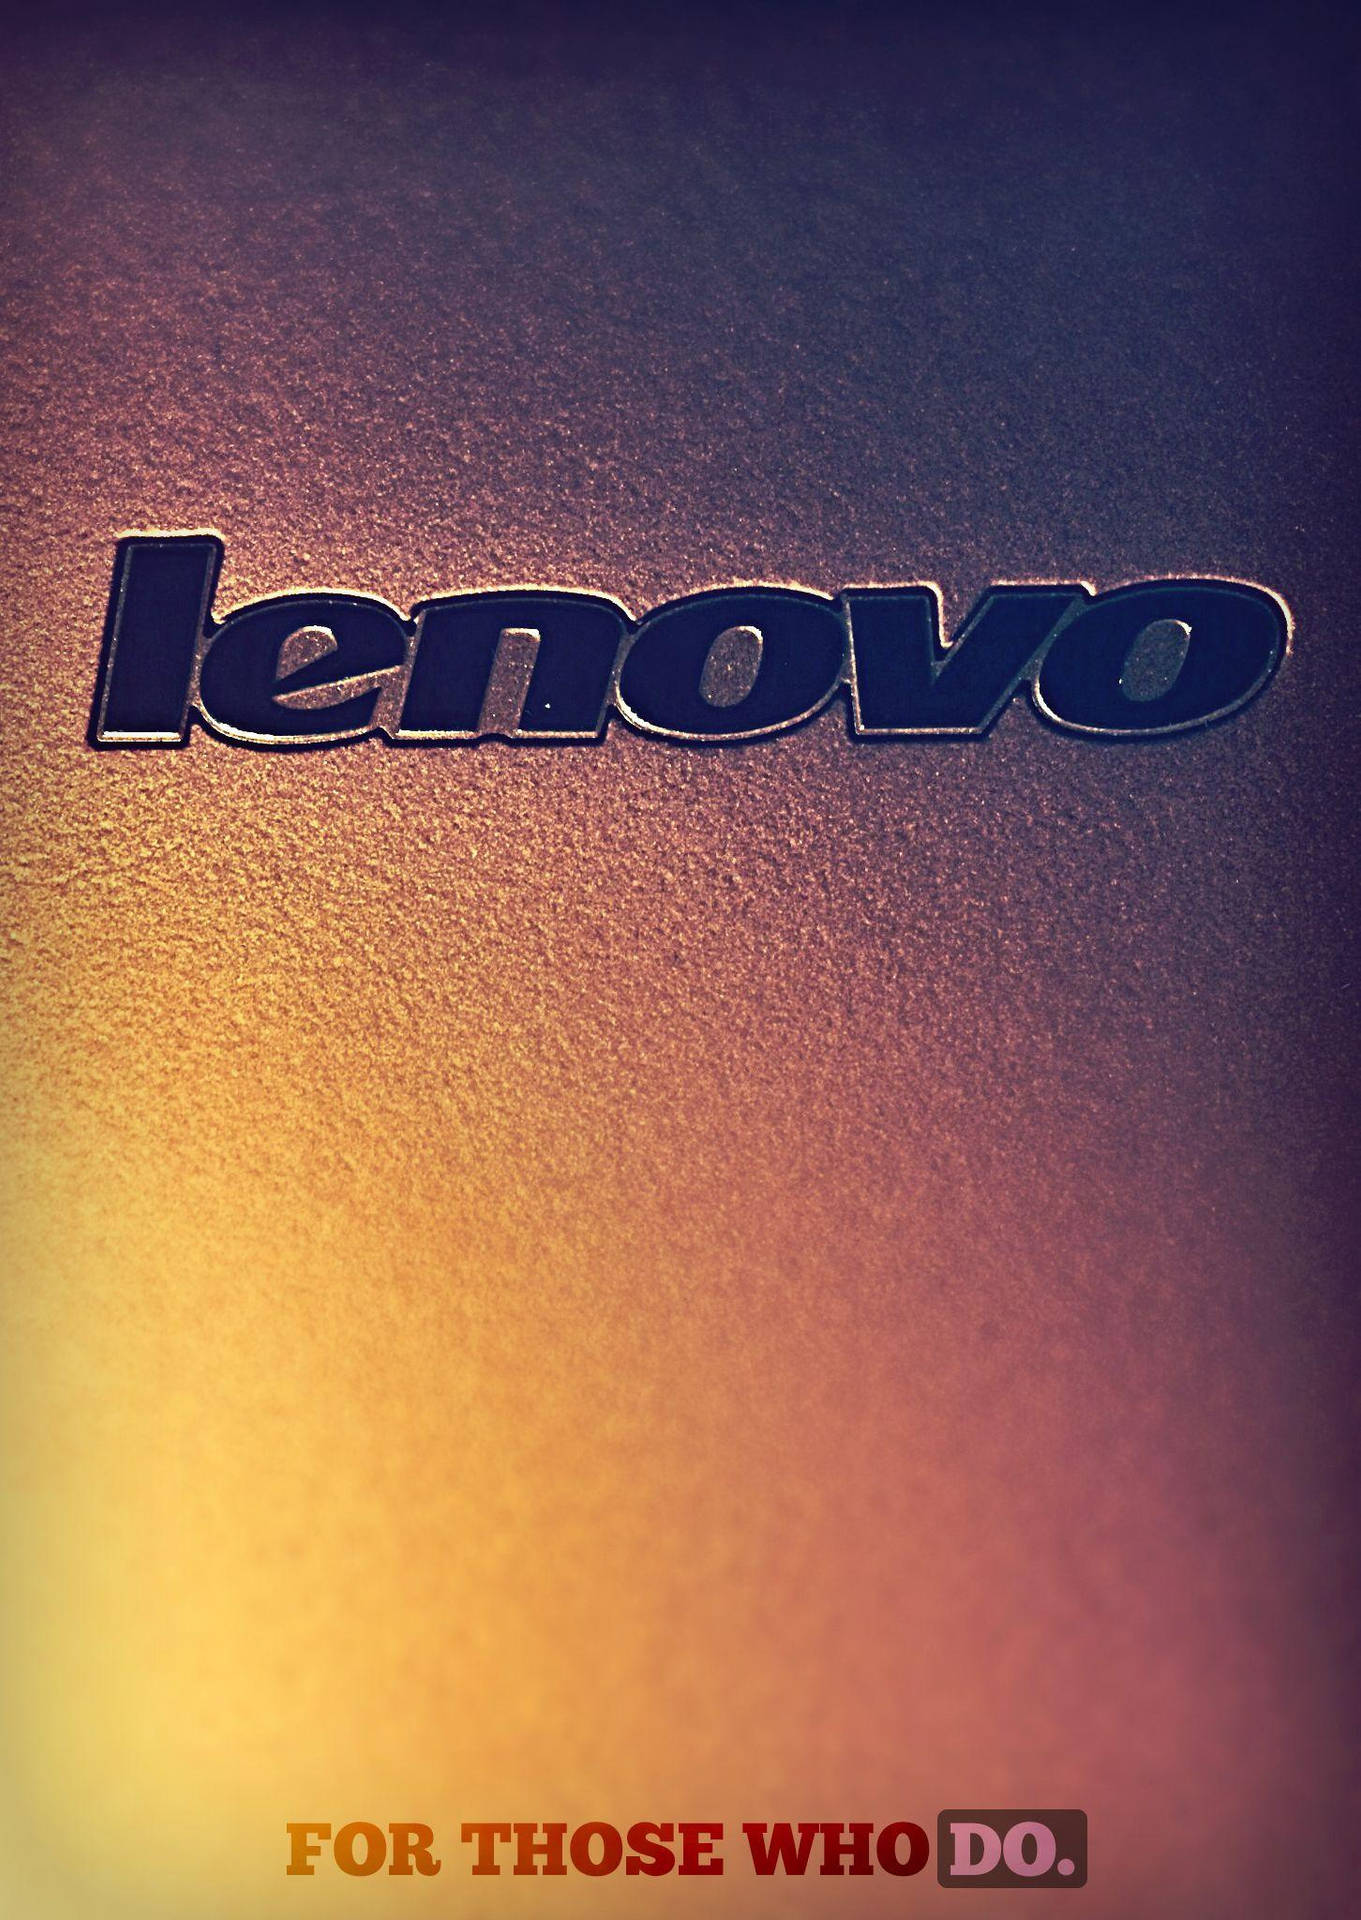 Laptoplogo Lenovo Hd Wallpaper